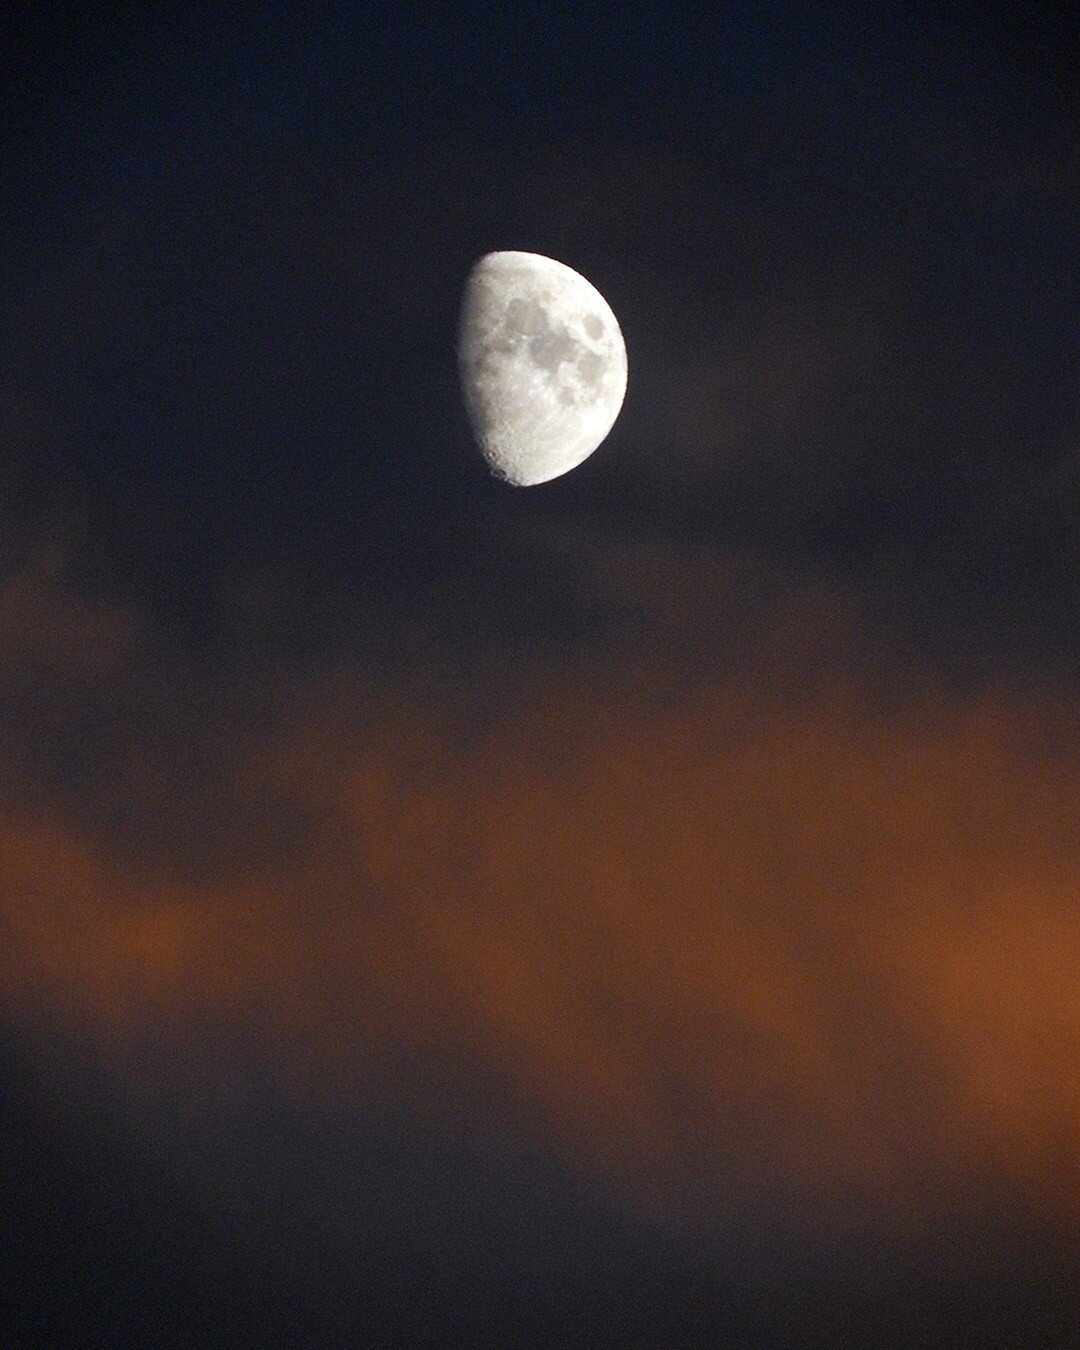 &ldquo; La lune est le r&ecirc;ve du soleil &rdquo; 
.
.
.
.
.
#lune #moon #moonlovers #moonlight #thegreatoutdoors #pornsky #wandern #photooftheday #cloudporn #hikingculture #exploremore #getoutside #alpes #alps #valais #valaiswallis #naturephotogra